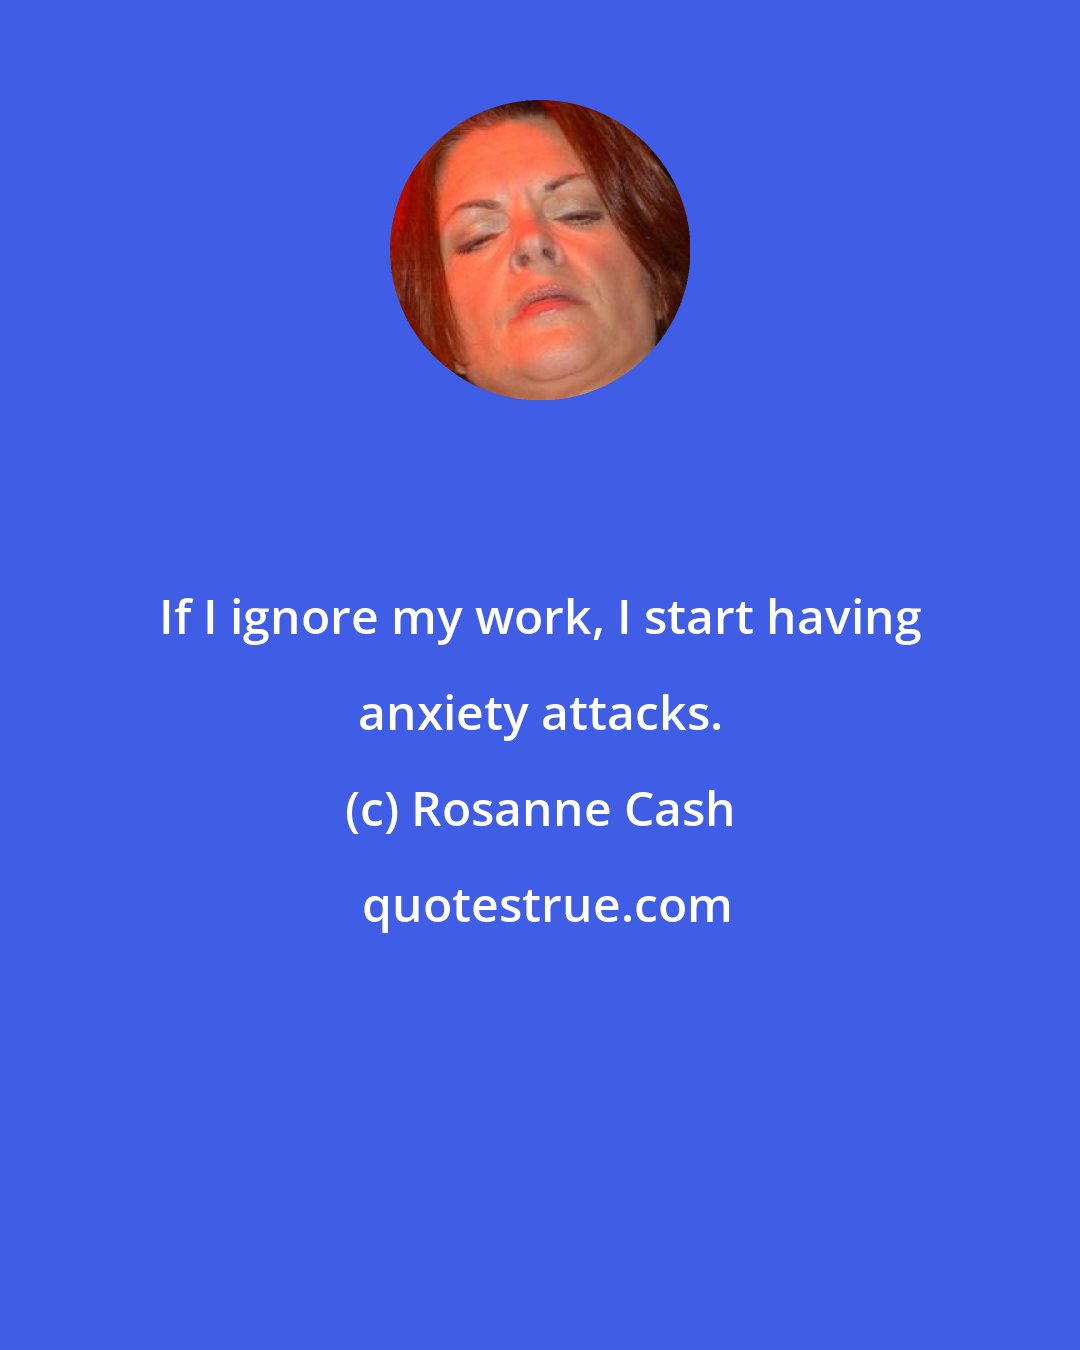 Rosanne Cash: If I ignore my work, I start having anxiety attacks.